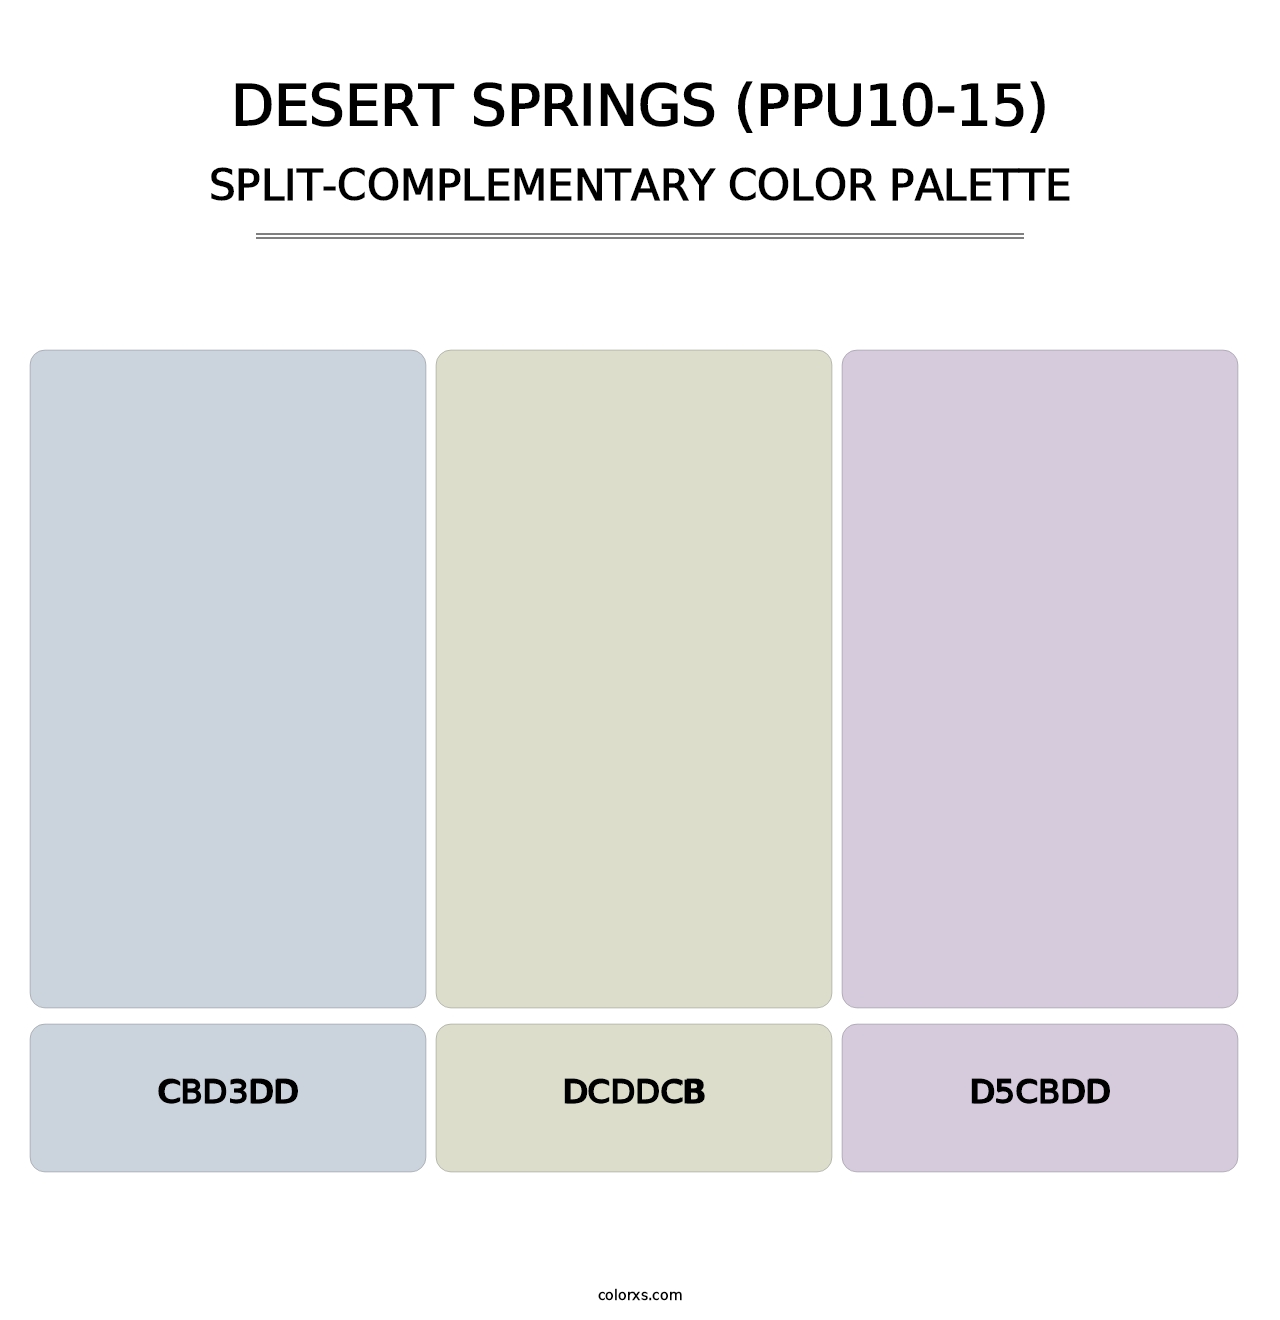 Desert Springs (PPU10-15) - Split-Complementary Color Palette